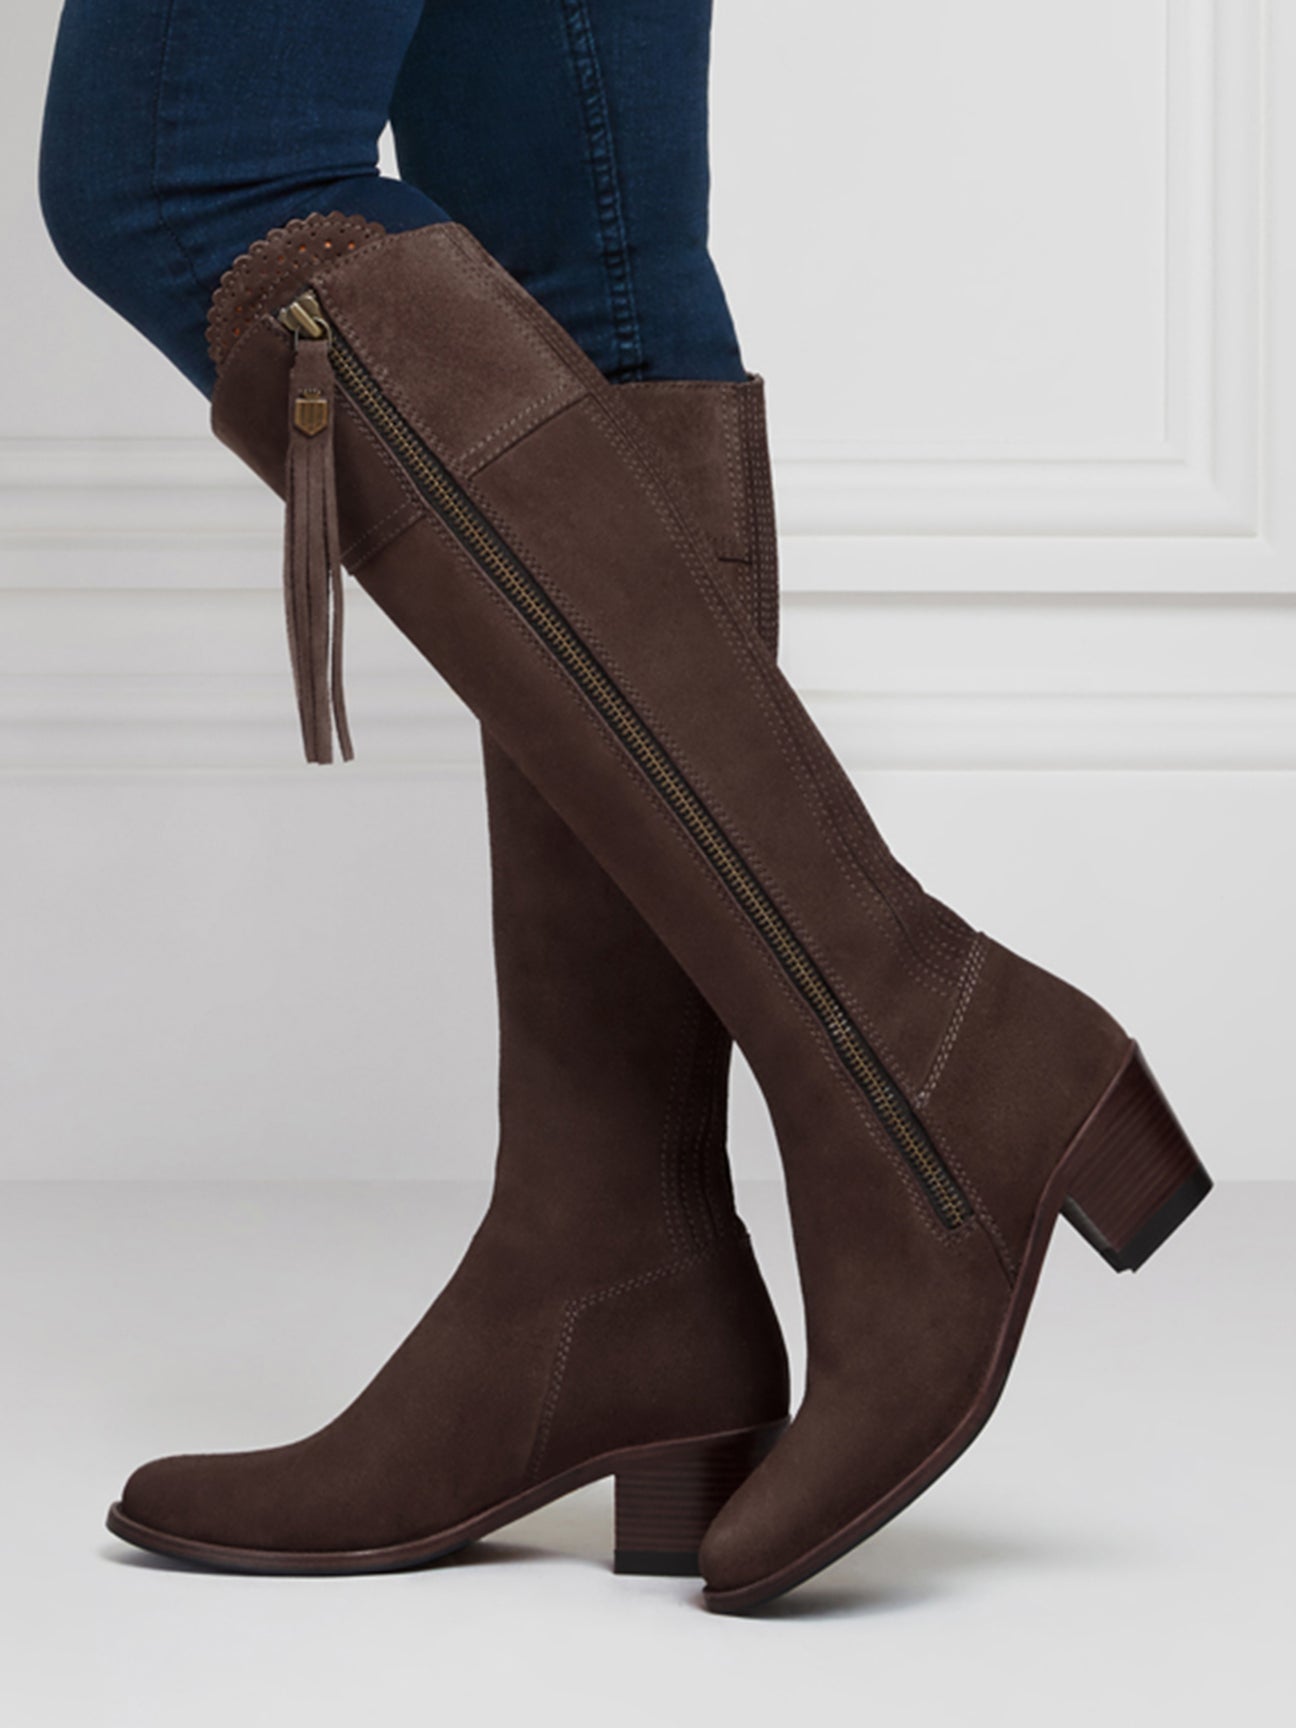 The Regina
Women's Tall Heeled Boot - Chocolate Suede, Narrow Calf